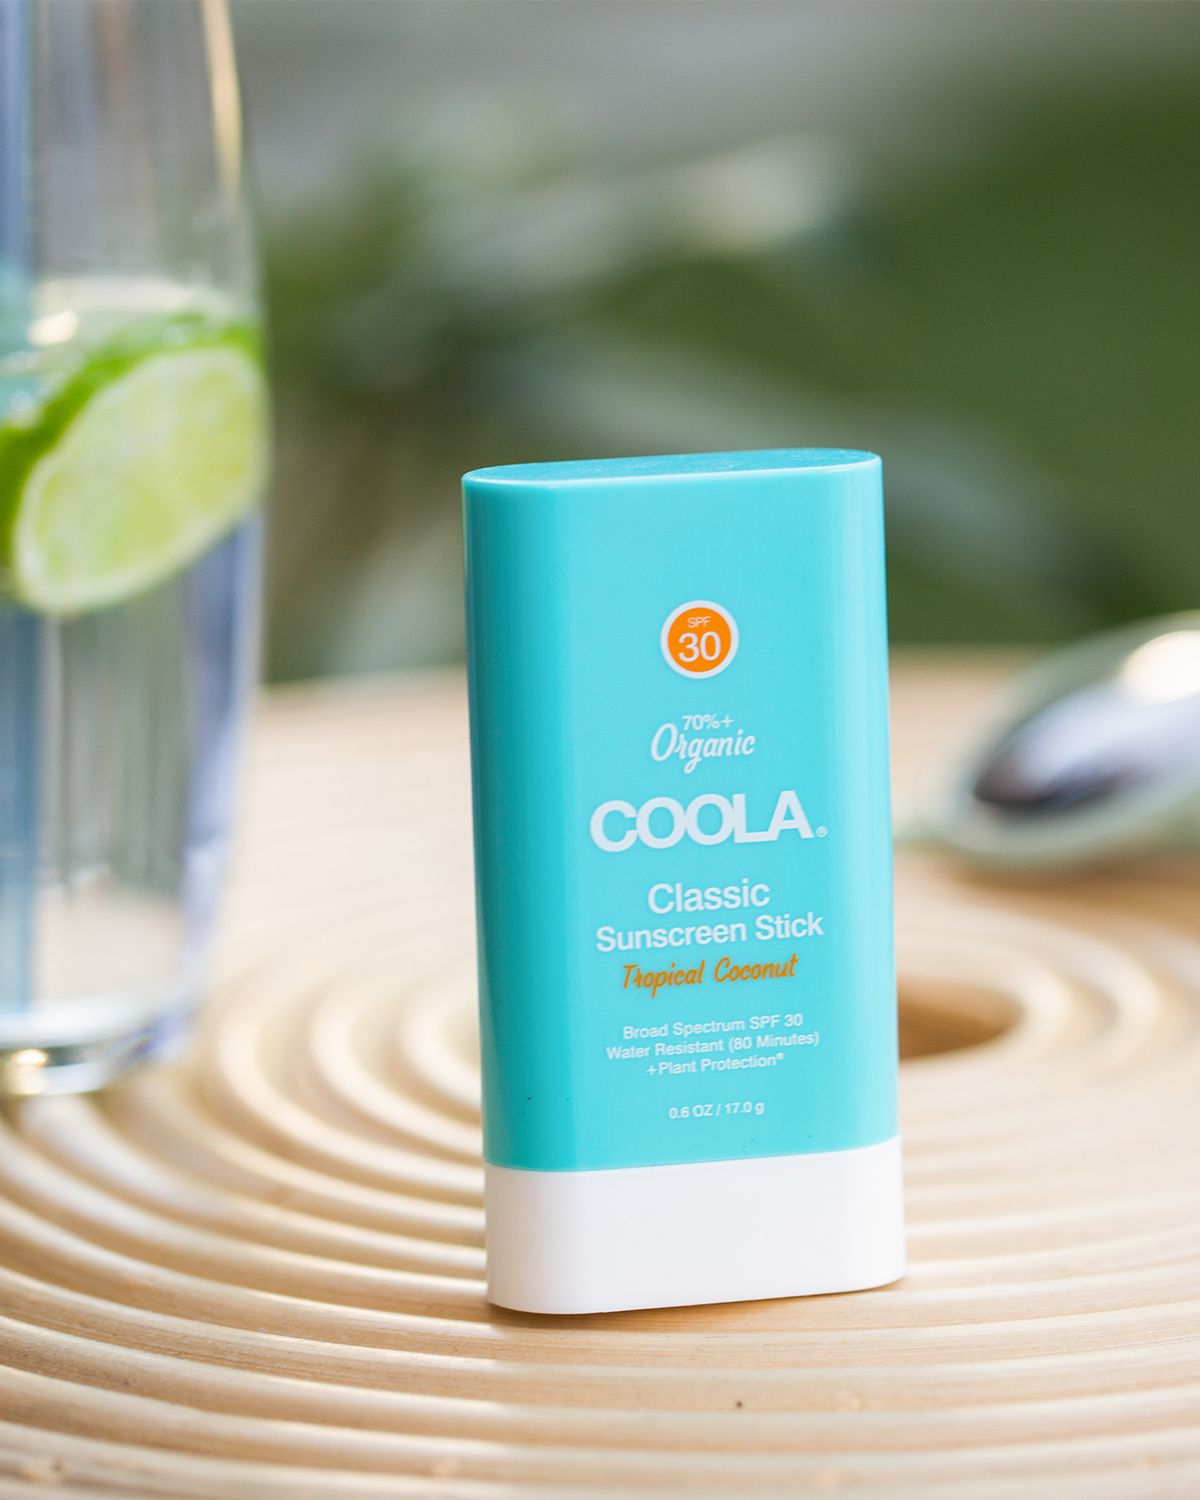 COOLA Classic Organic Sunscreen Stick, Tropical Coconut, SPF 30 - .75 fl oz